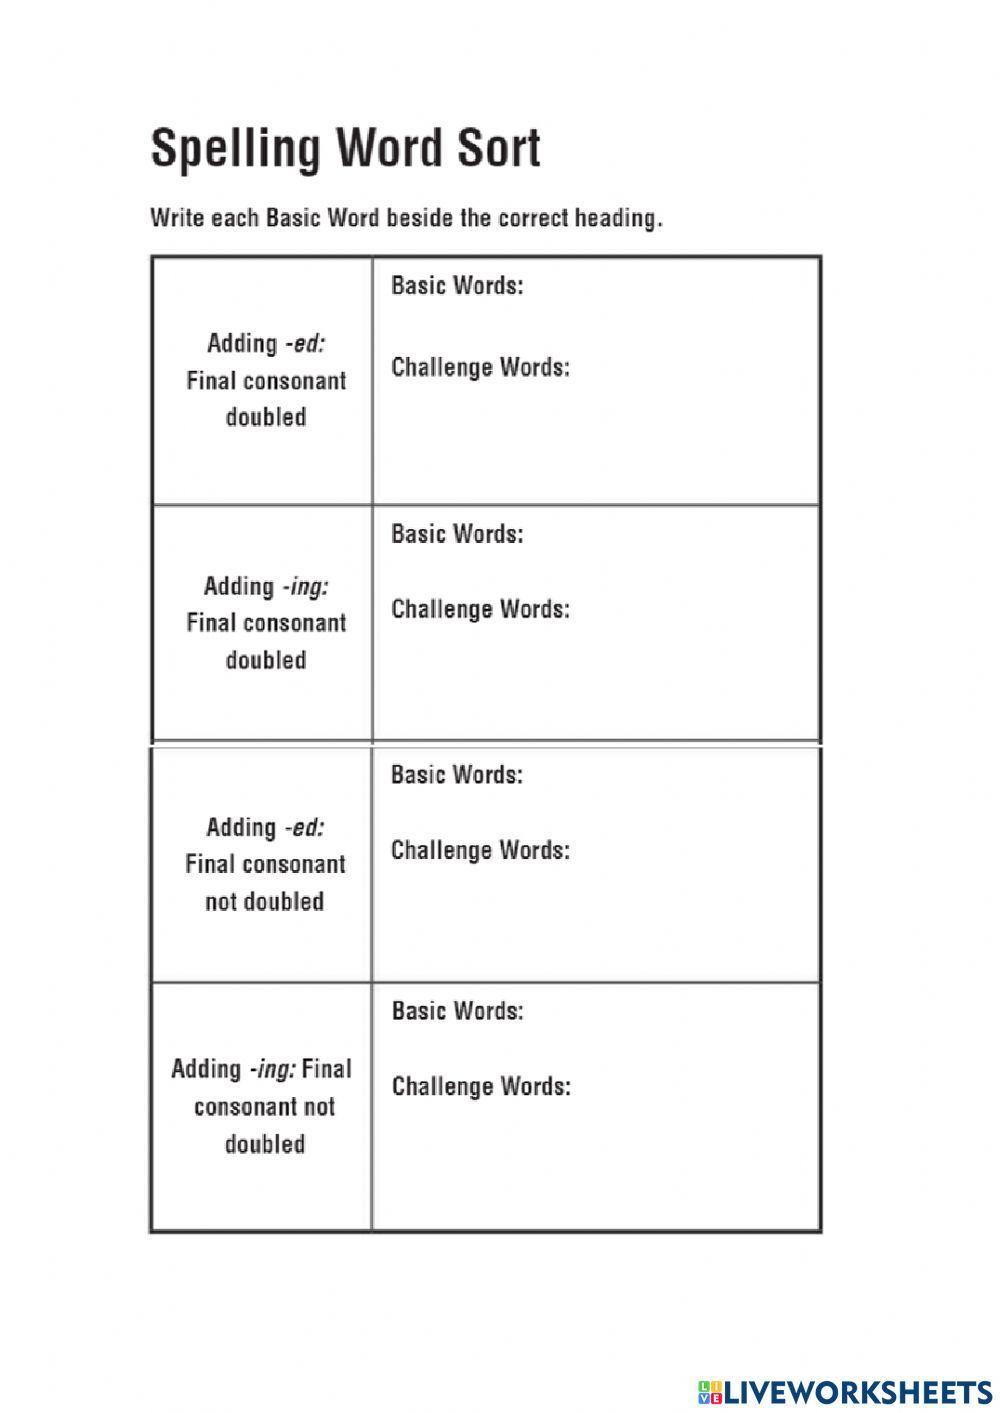 Spelling Lesson 16-17